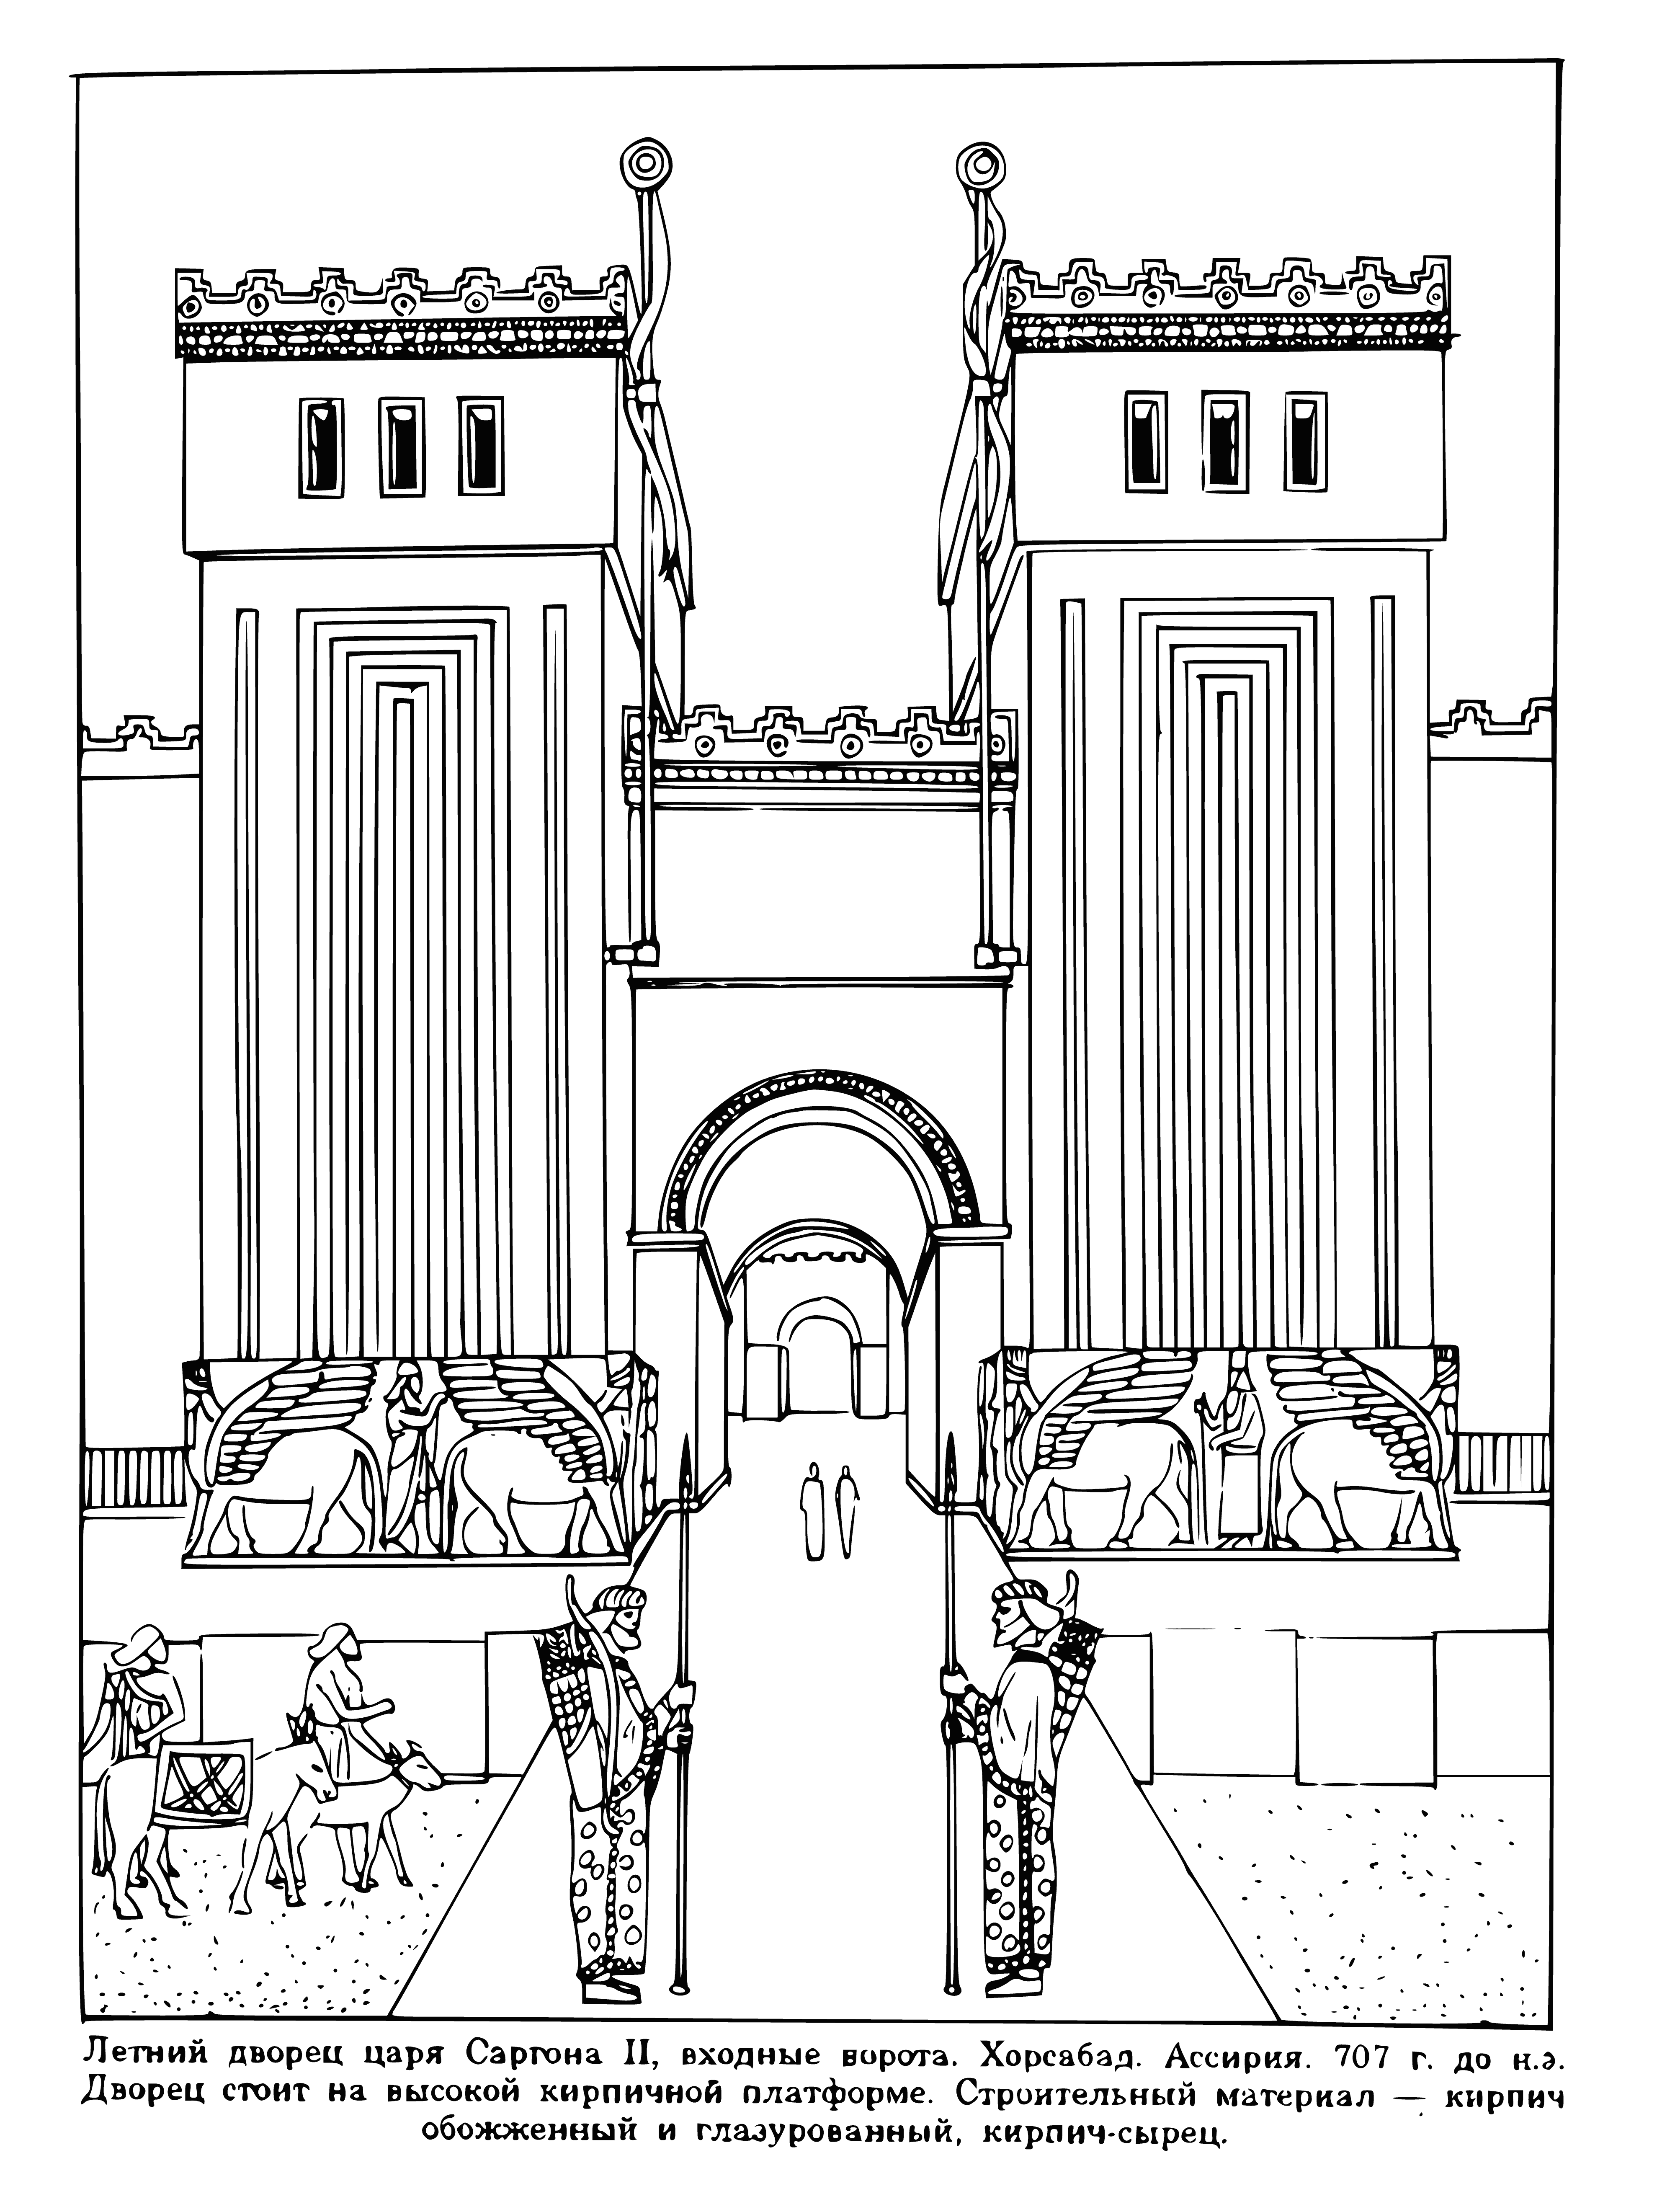 Palace of King Sargon coloring page